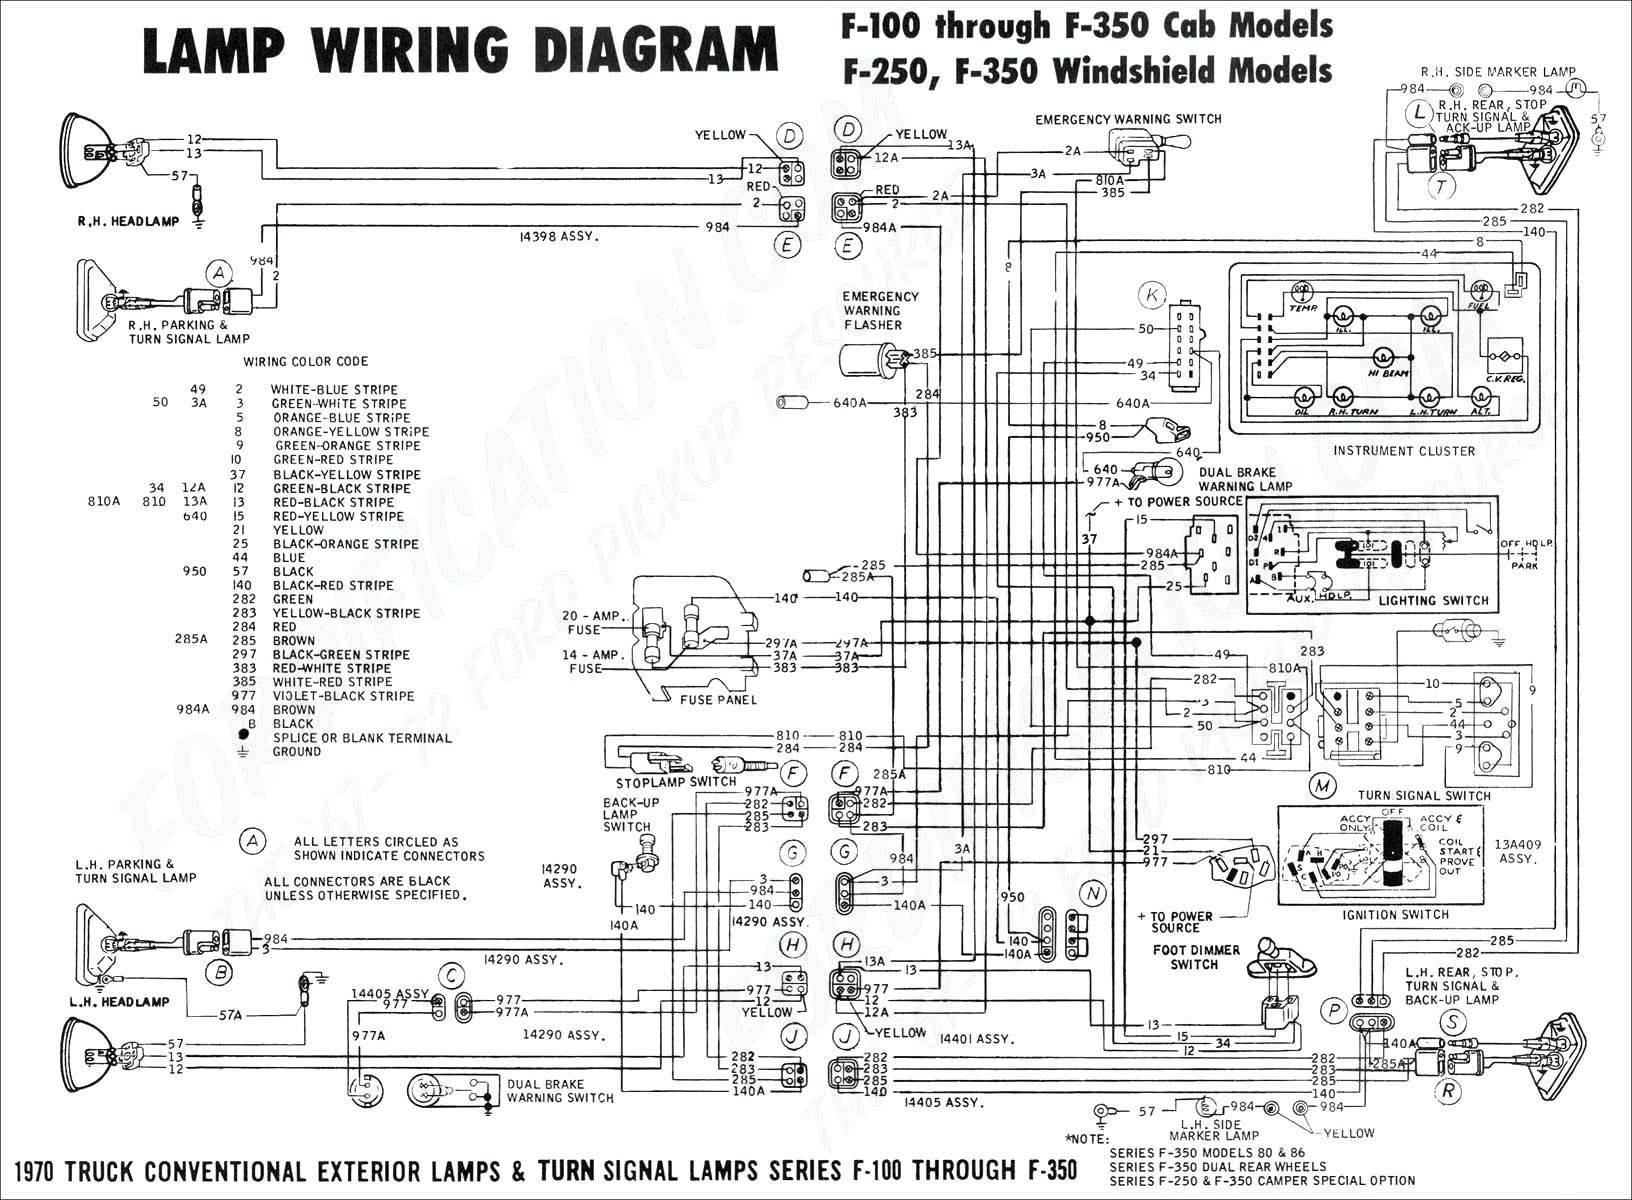 Battery Switch Wiring Diagram Boat Dual Battery Wiring Diagram Alternator Detailed Schematics Of Battery Switch Wiring Diagram